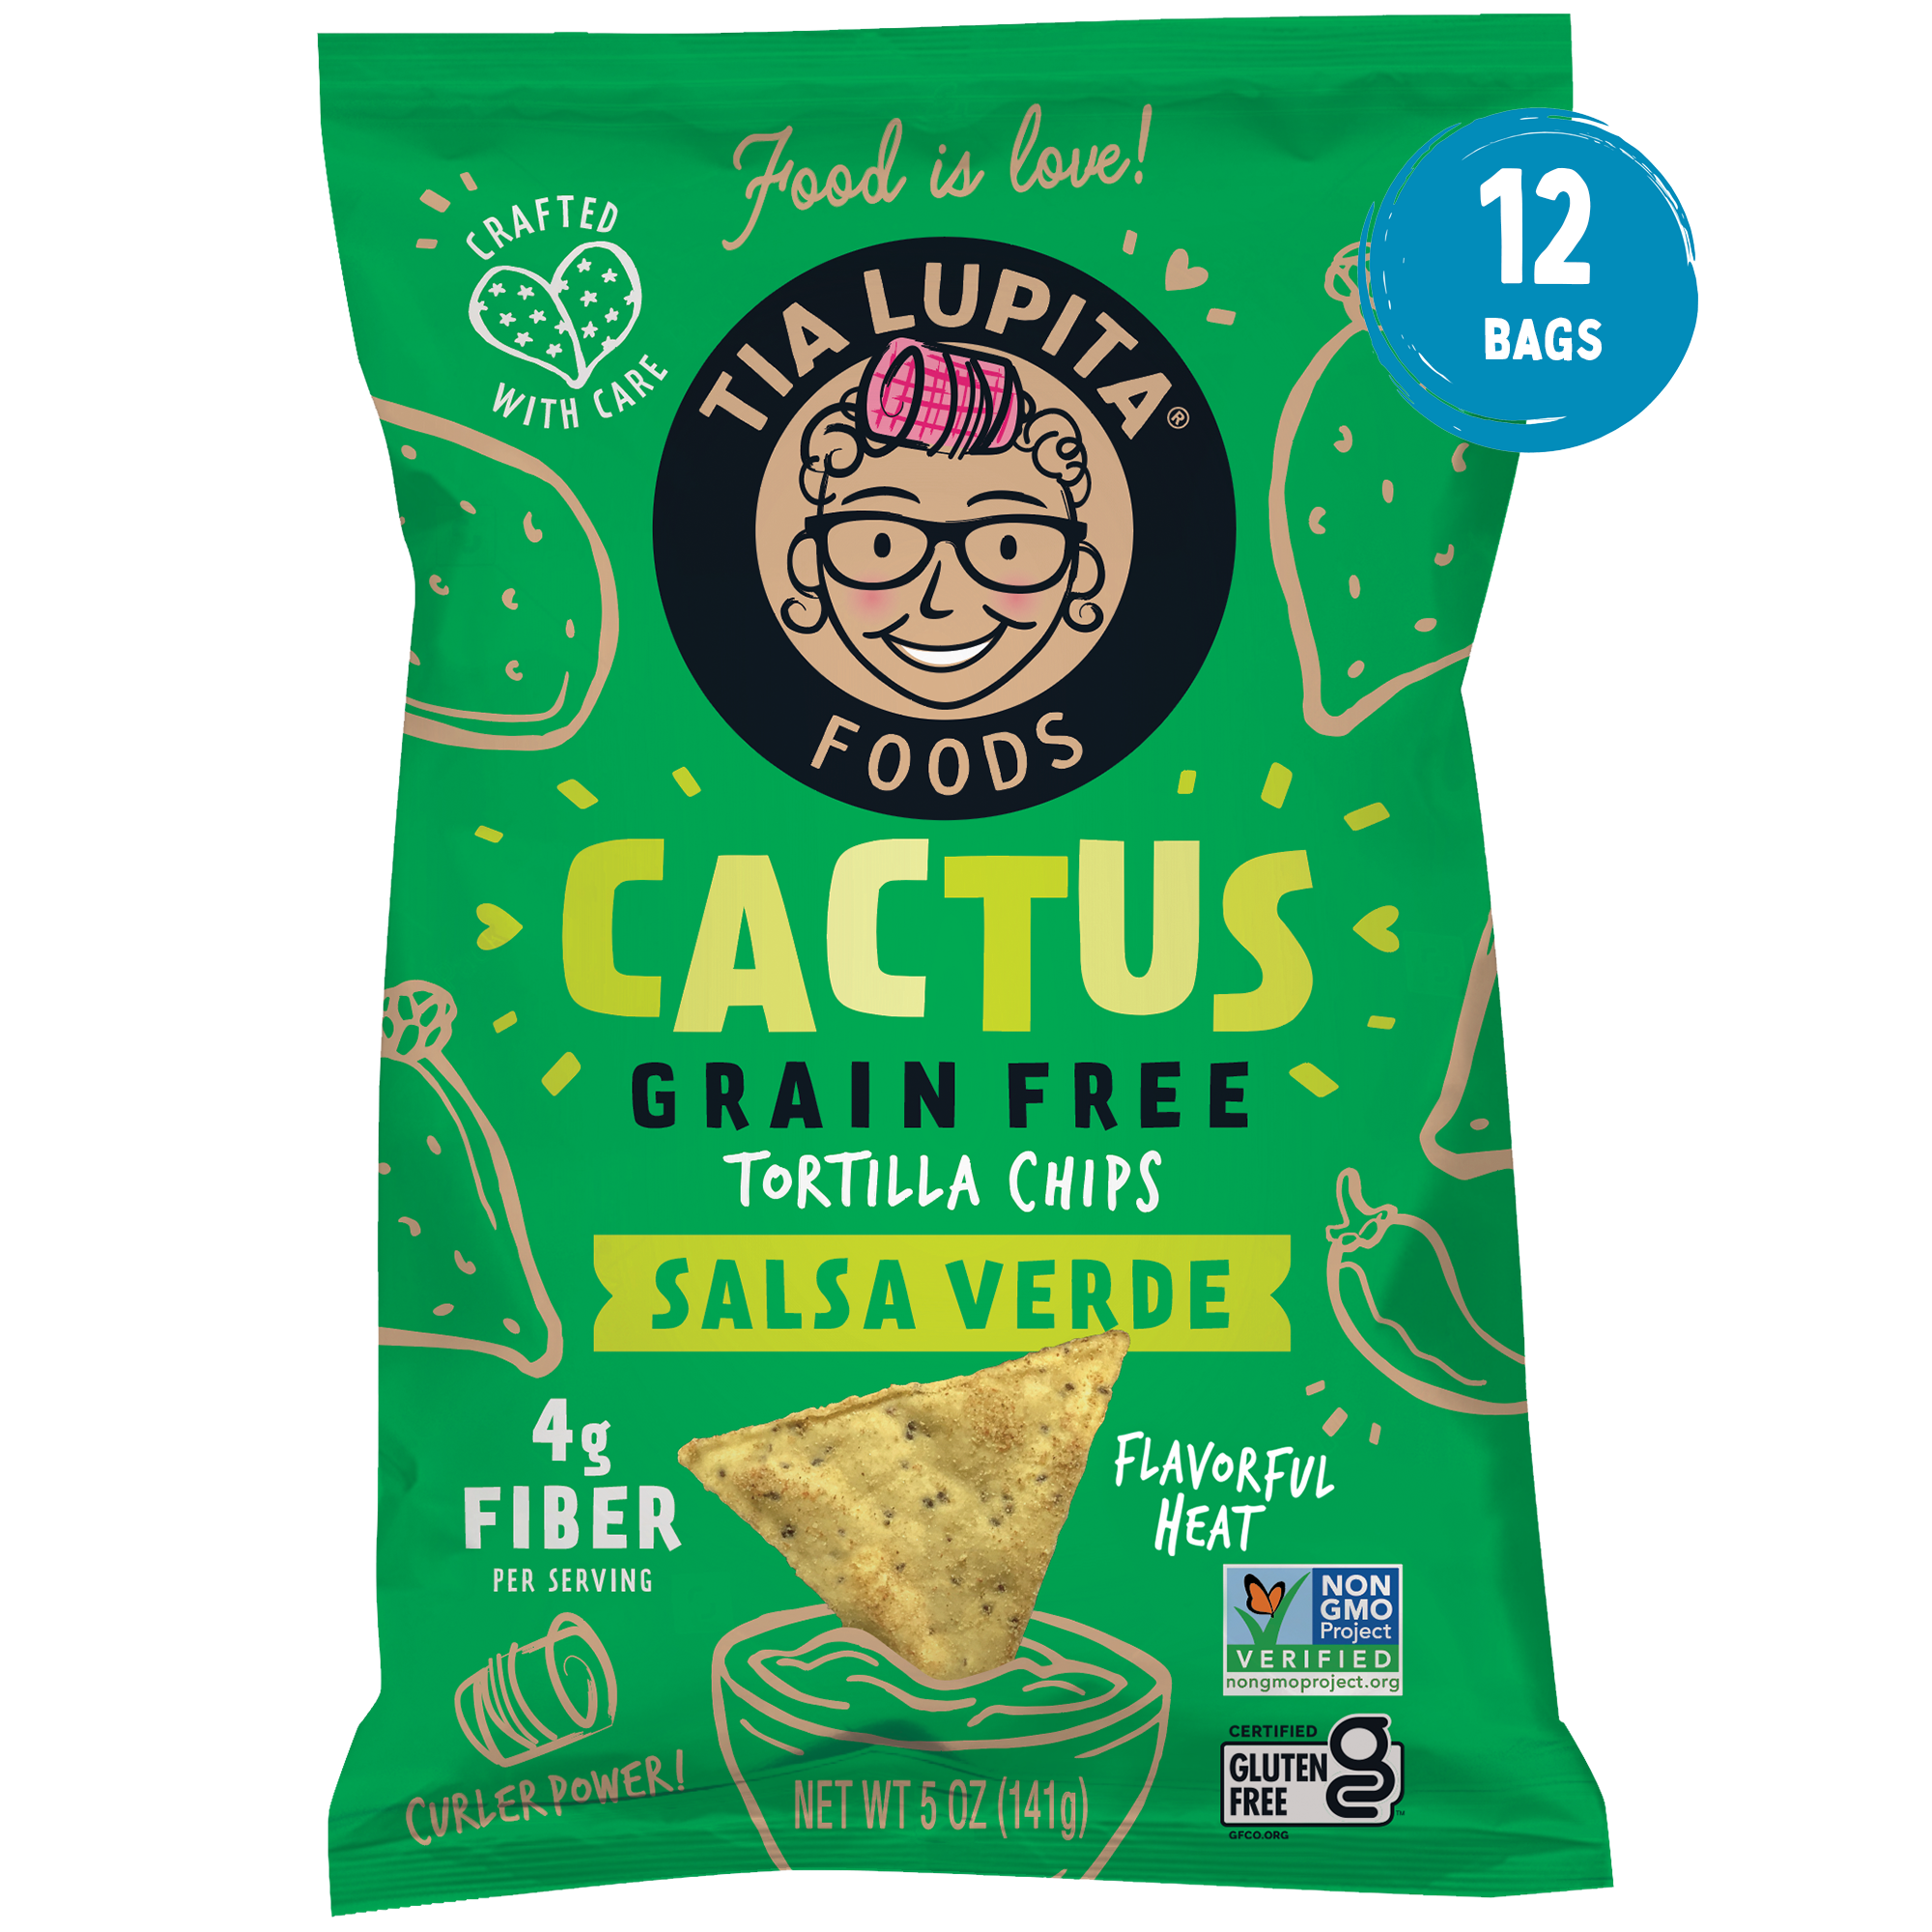 Salsa Verde Grain Free Cactus Chips